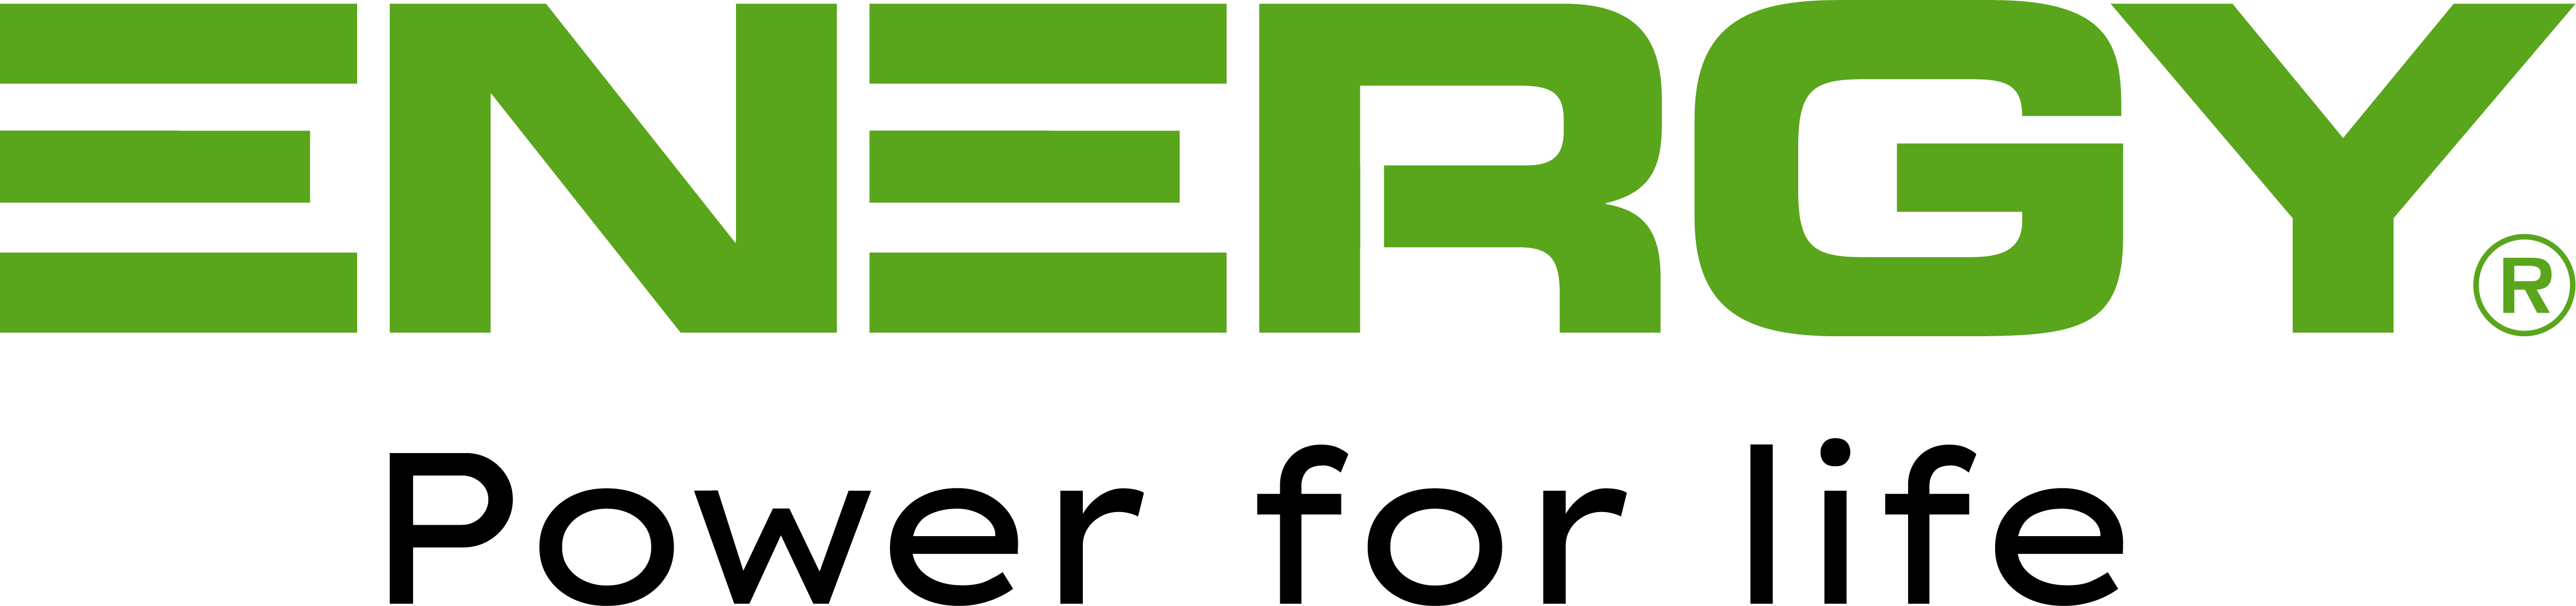 energy_gruppi-logo.png